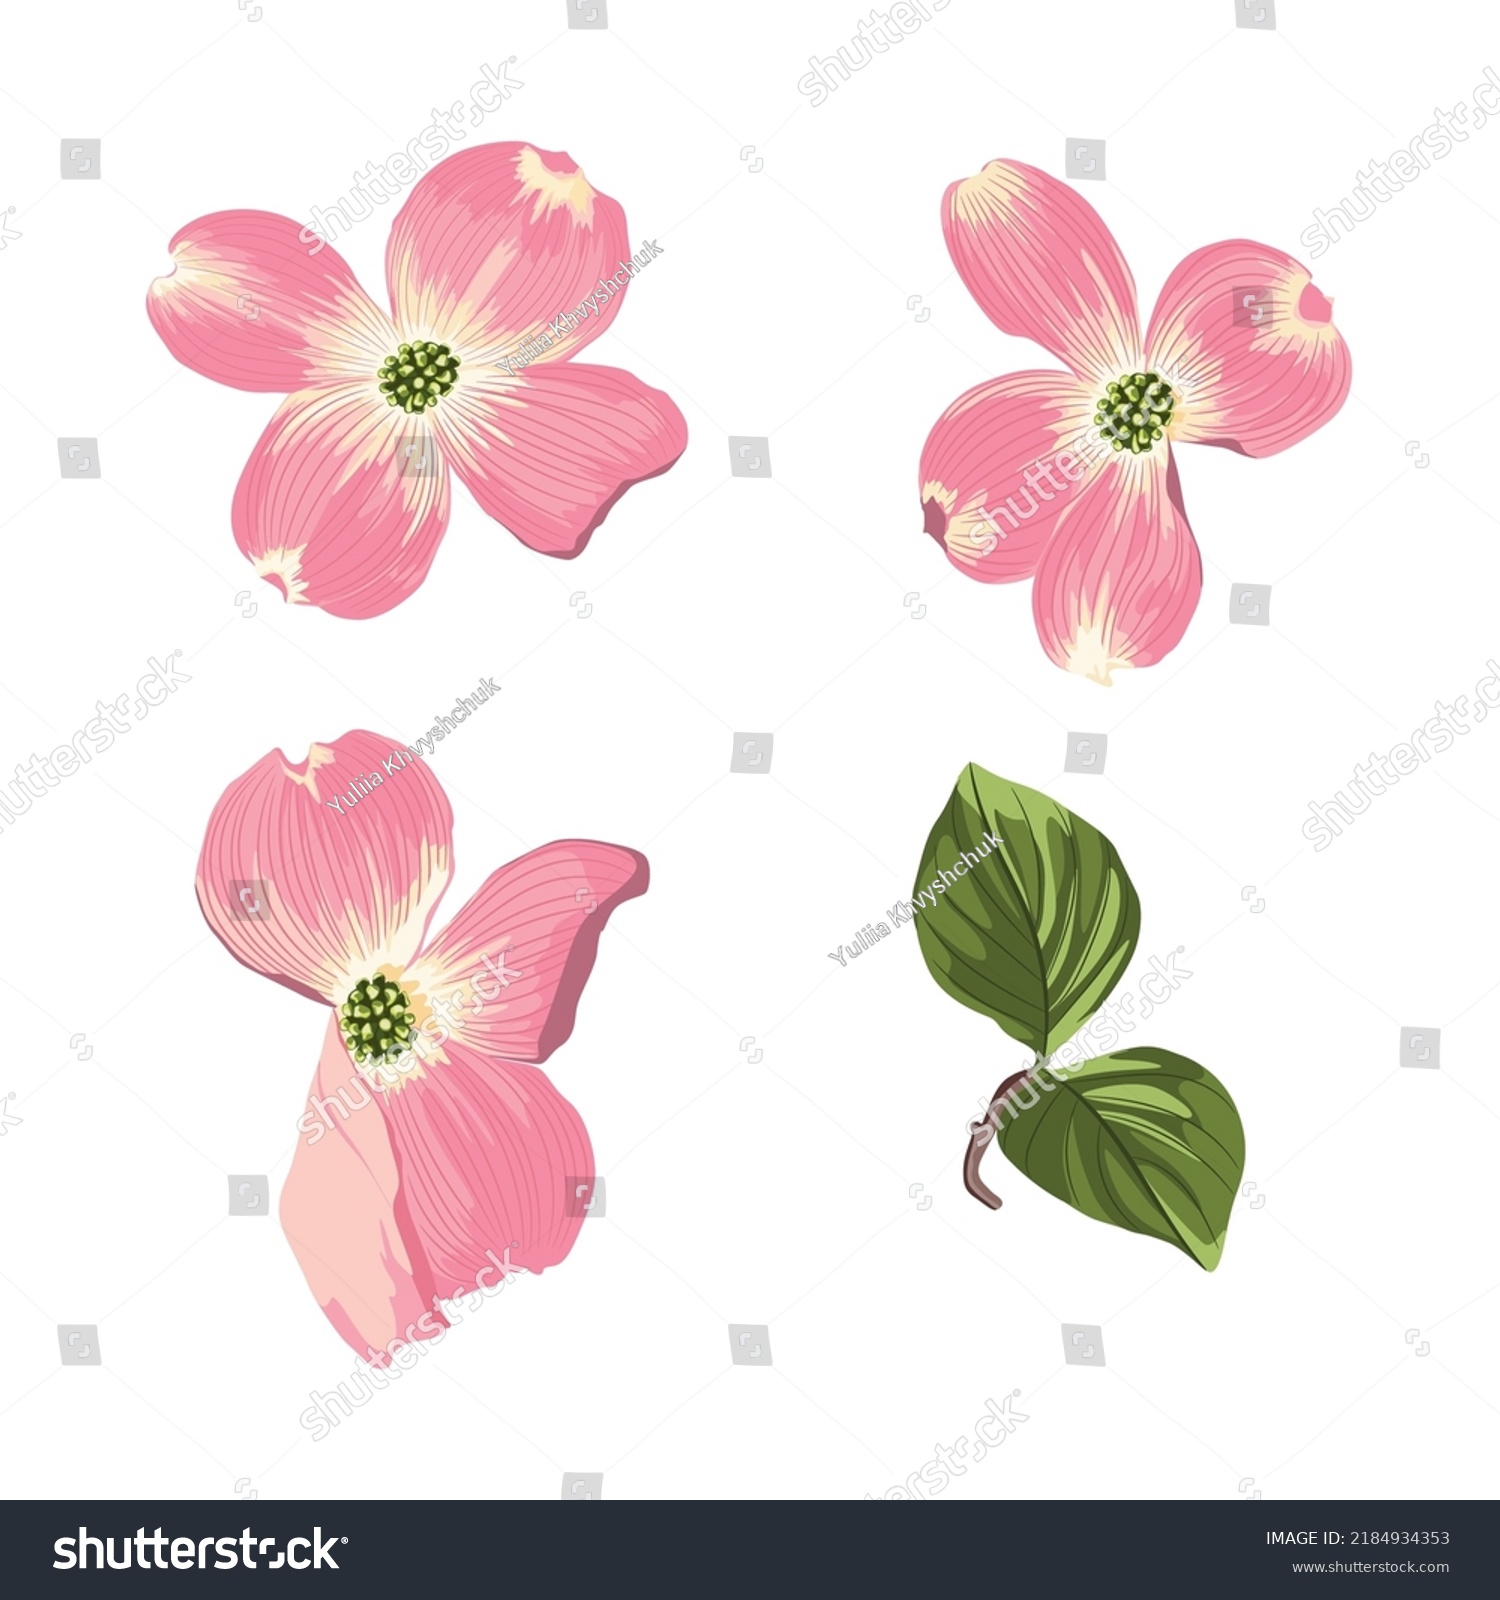 SVG of Pink Dogwood (Cornus florida). Hand drawn illustration of blooming dogwood flowers with leaves. svg